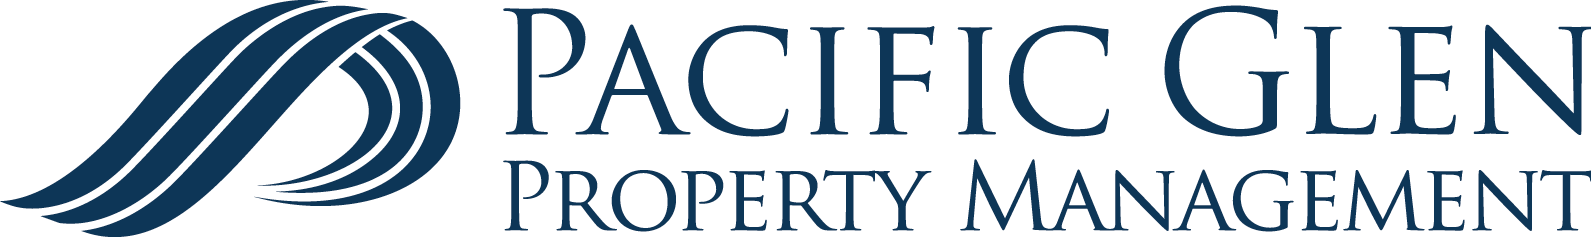 Pacific Glen Property Management Logo